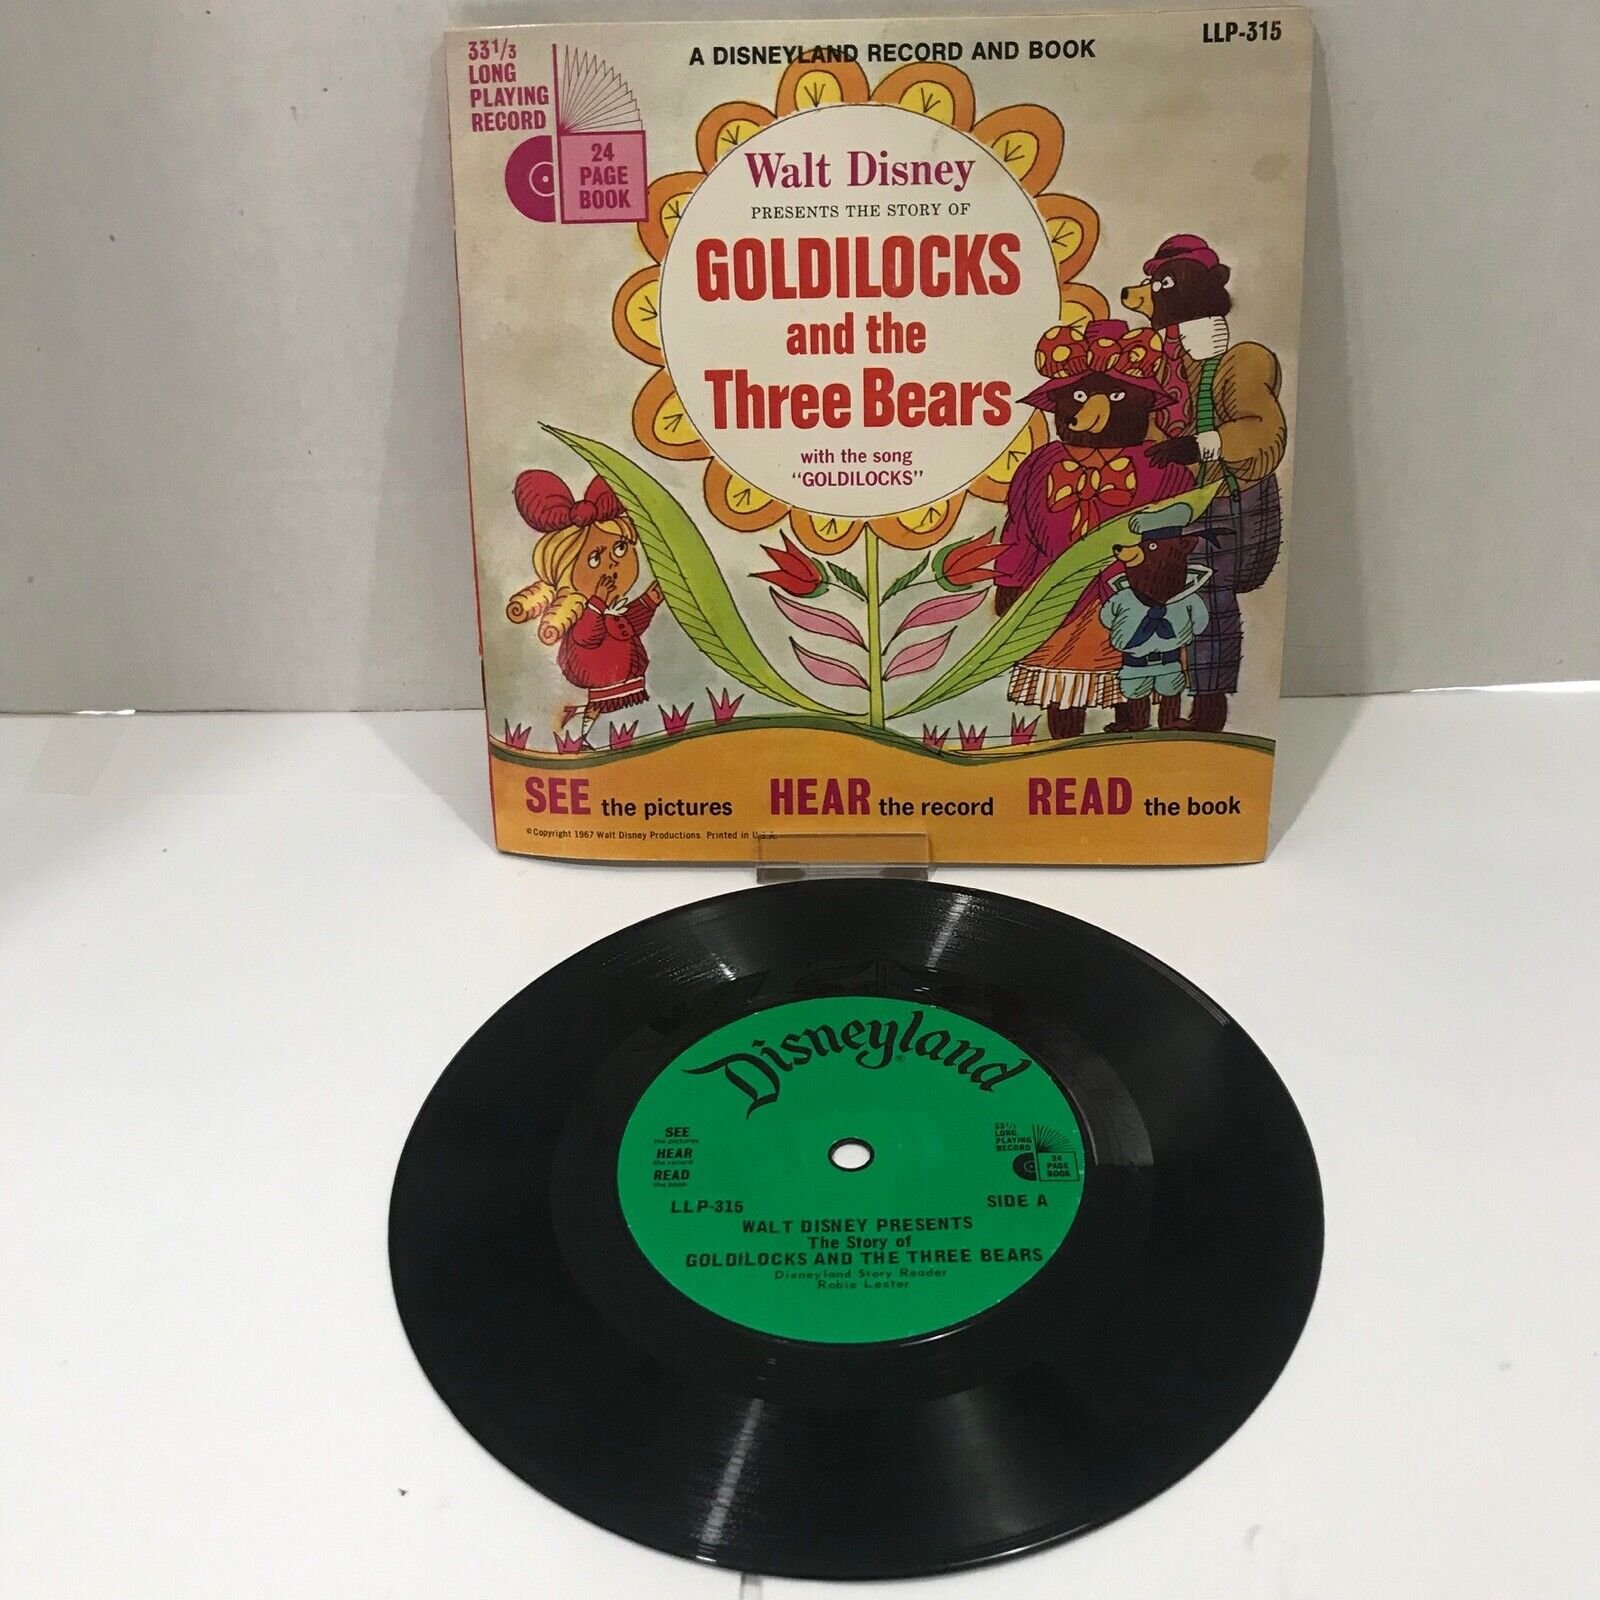 1967 Walt Disney Goldilocks & The Three Bears Record 33 1/3 LP Album And Book